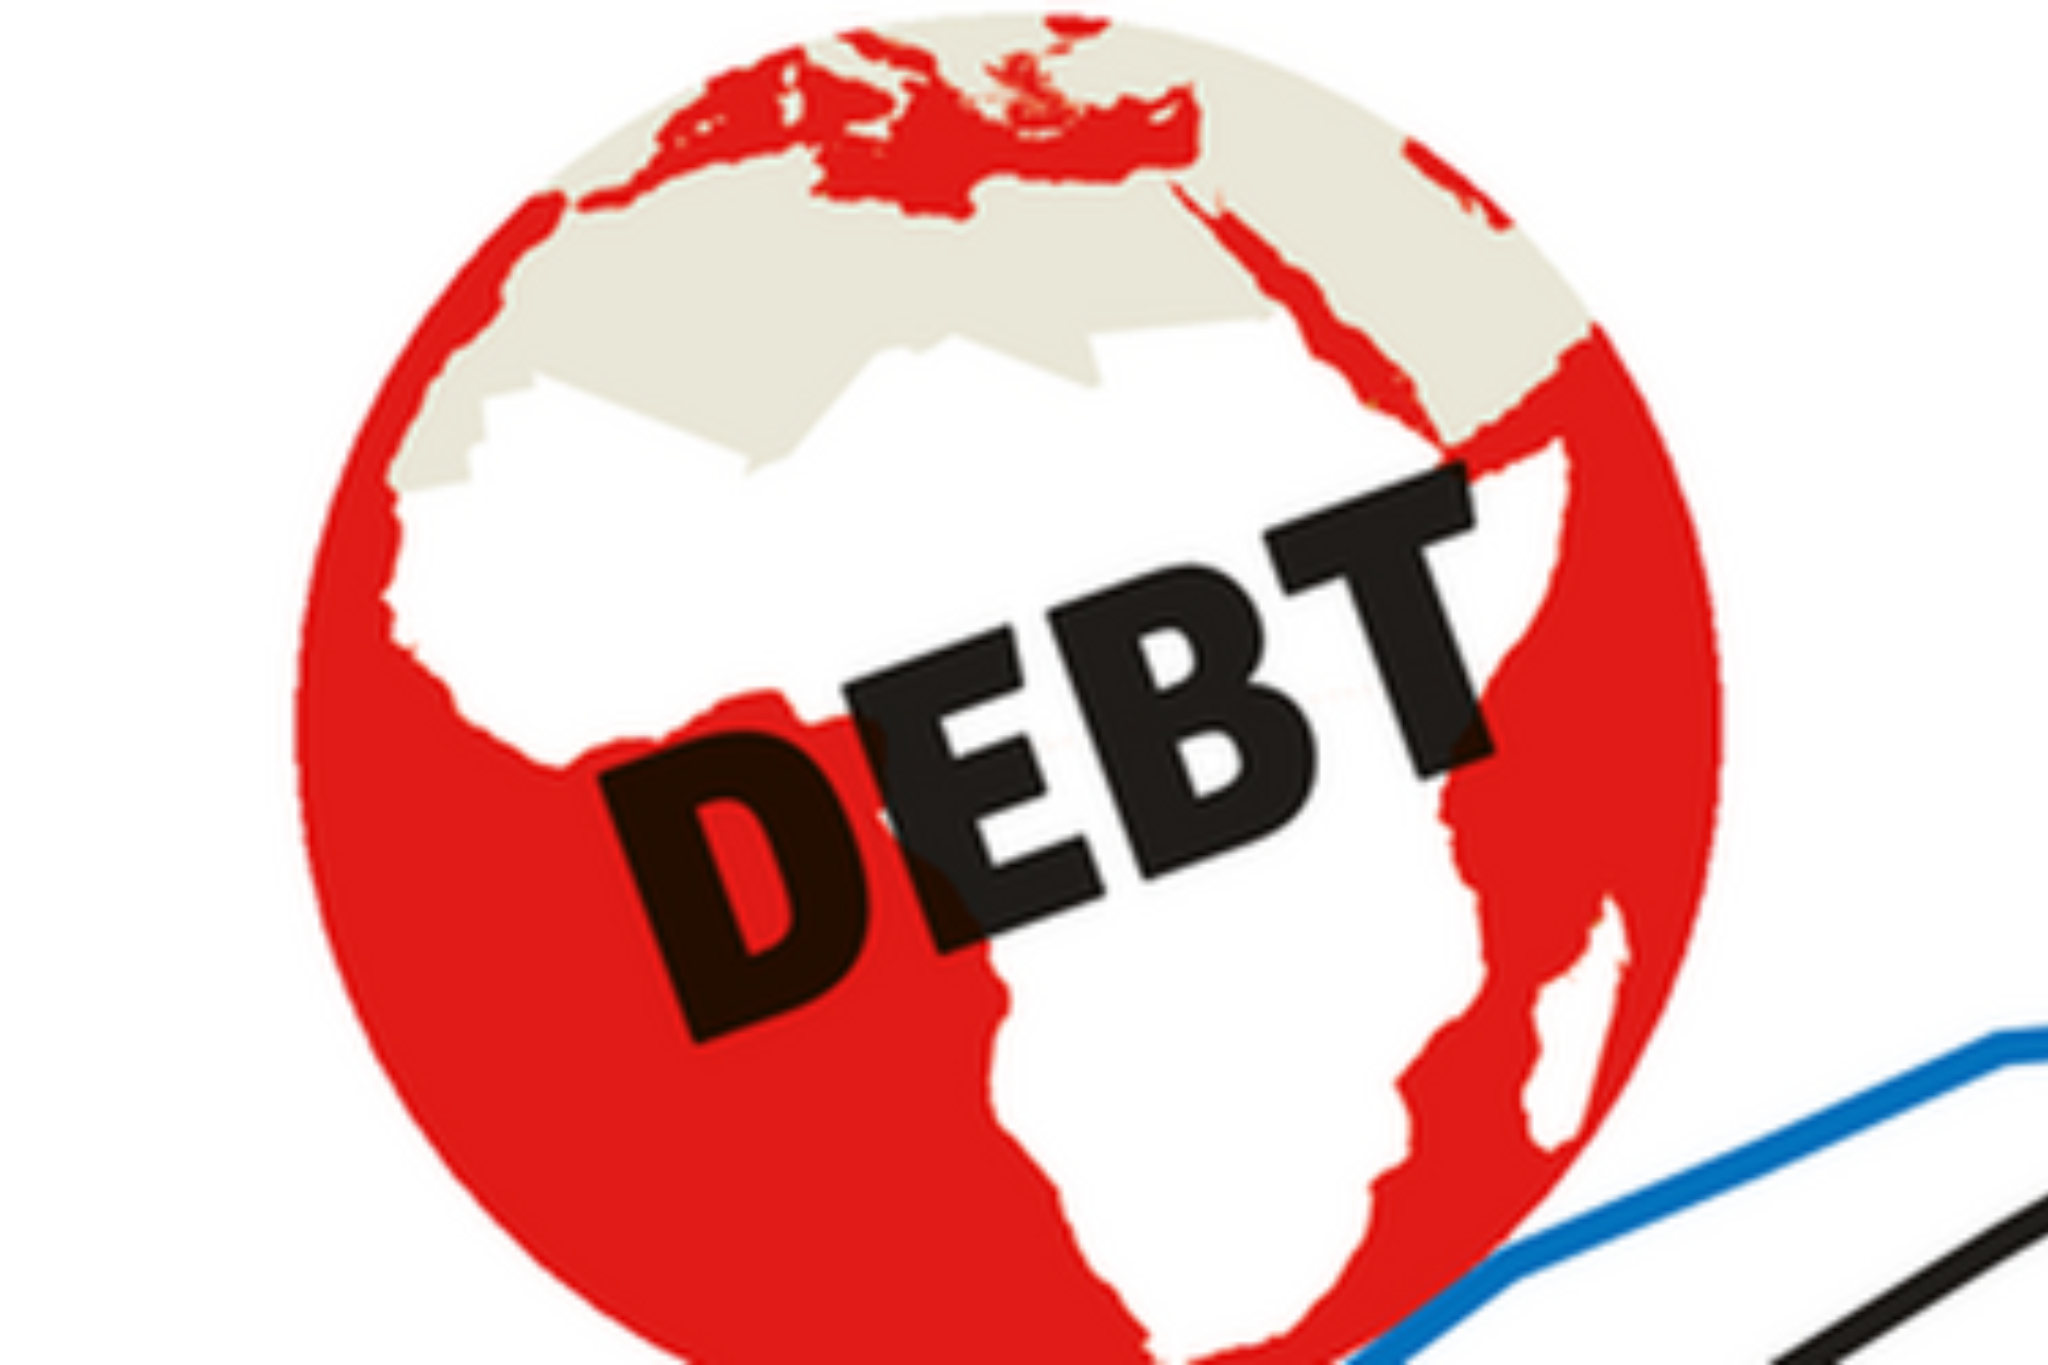 Public Debt in Africa